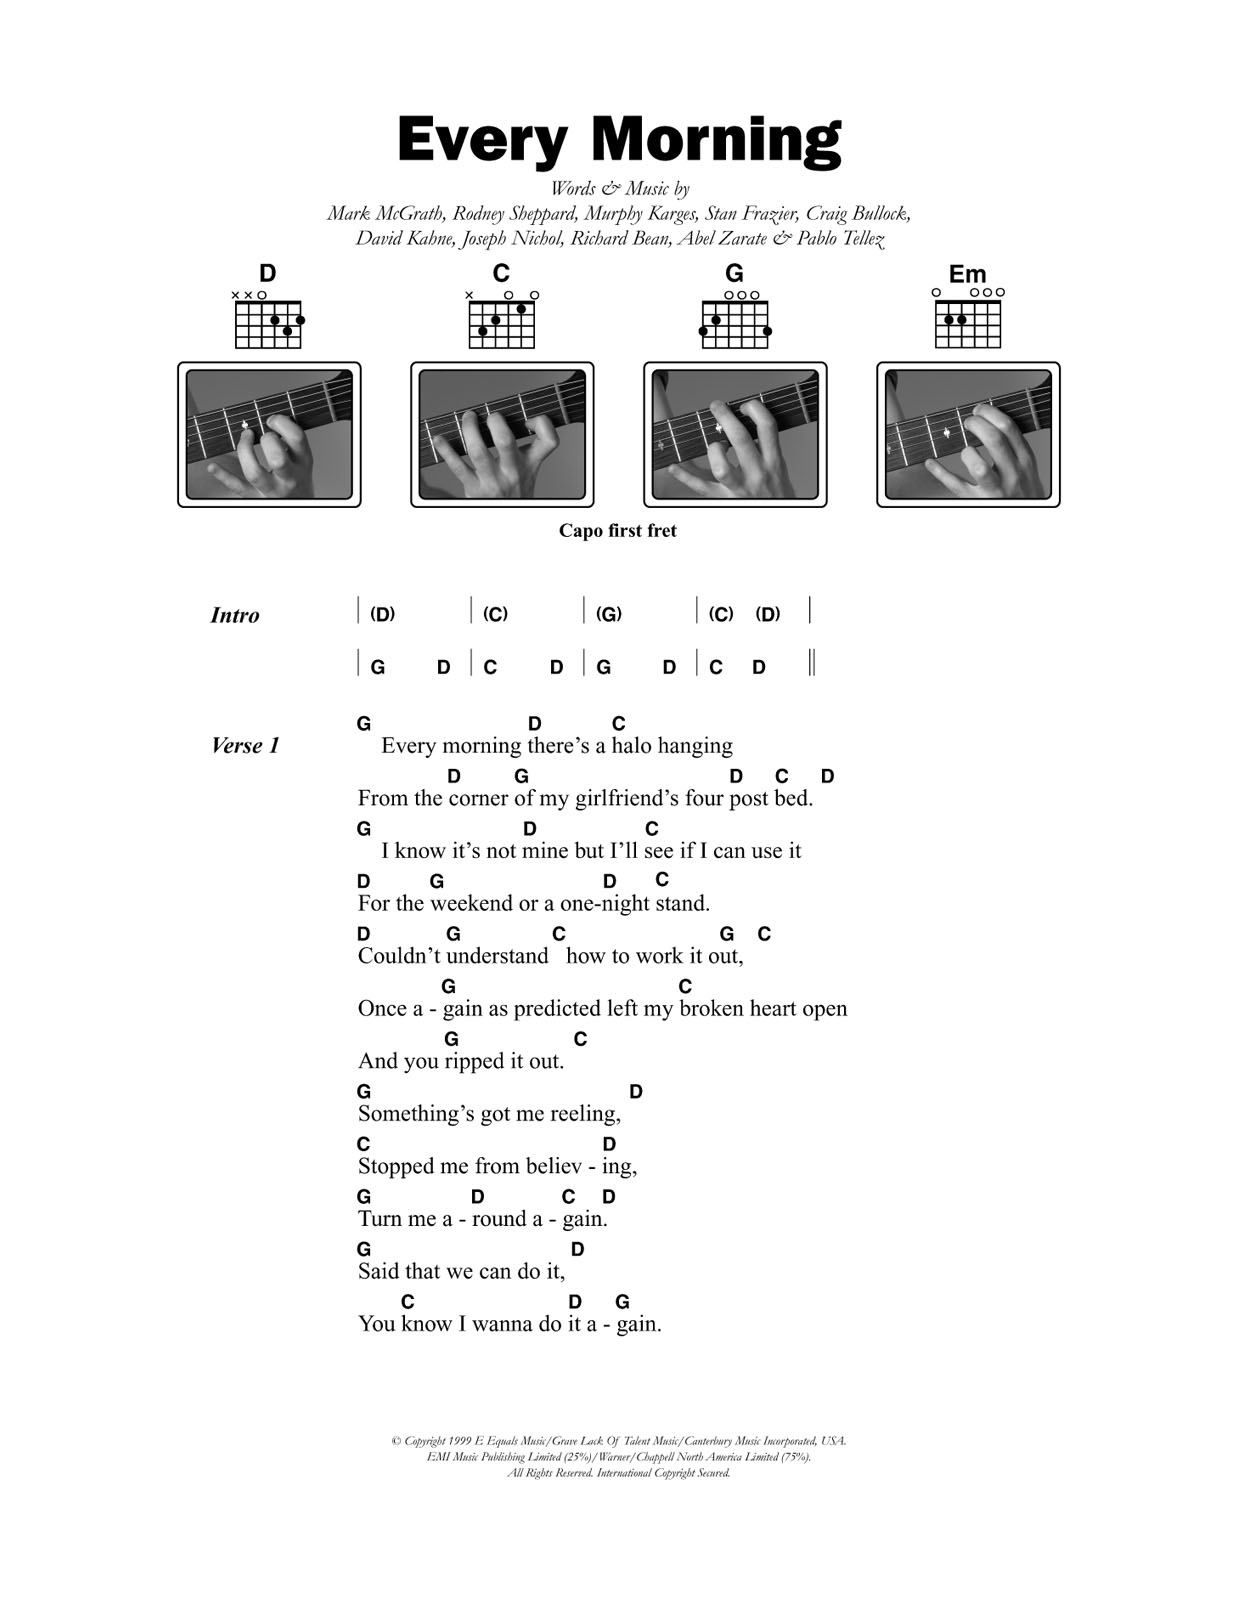 Sugar Ray Every Morning Sheet Music Notes & Chords for Lyrics & Piano Chords - Download or Print PDF